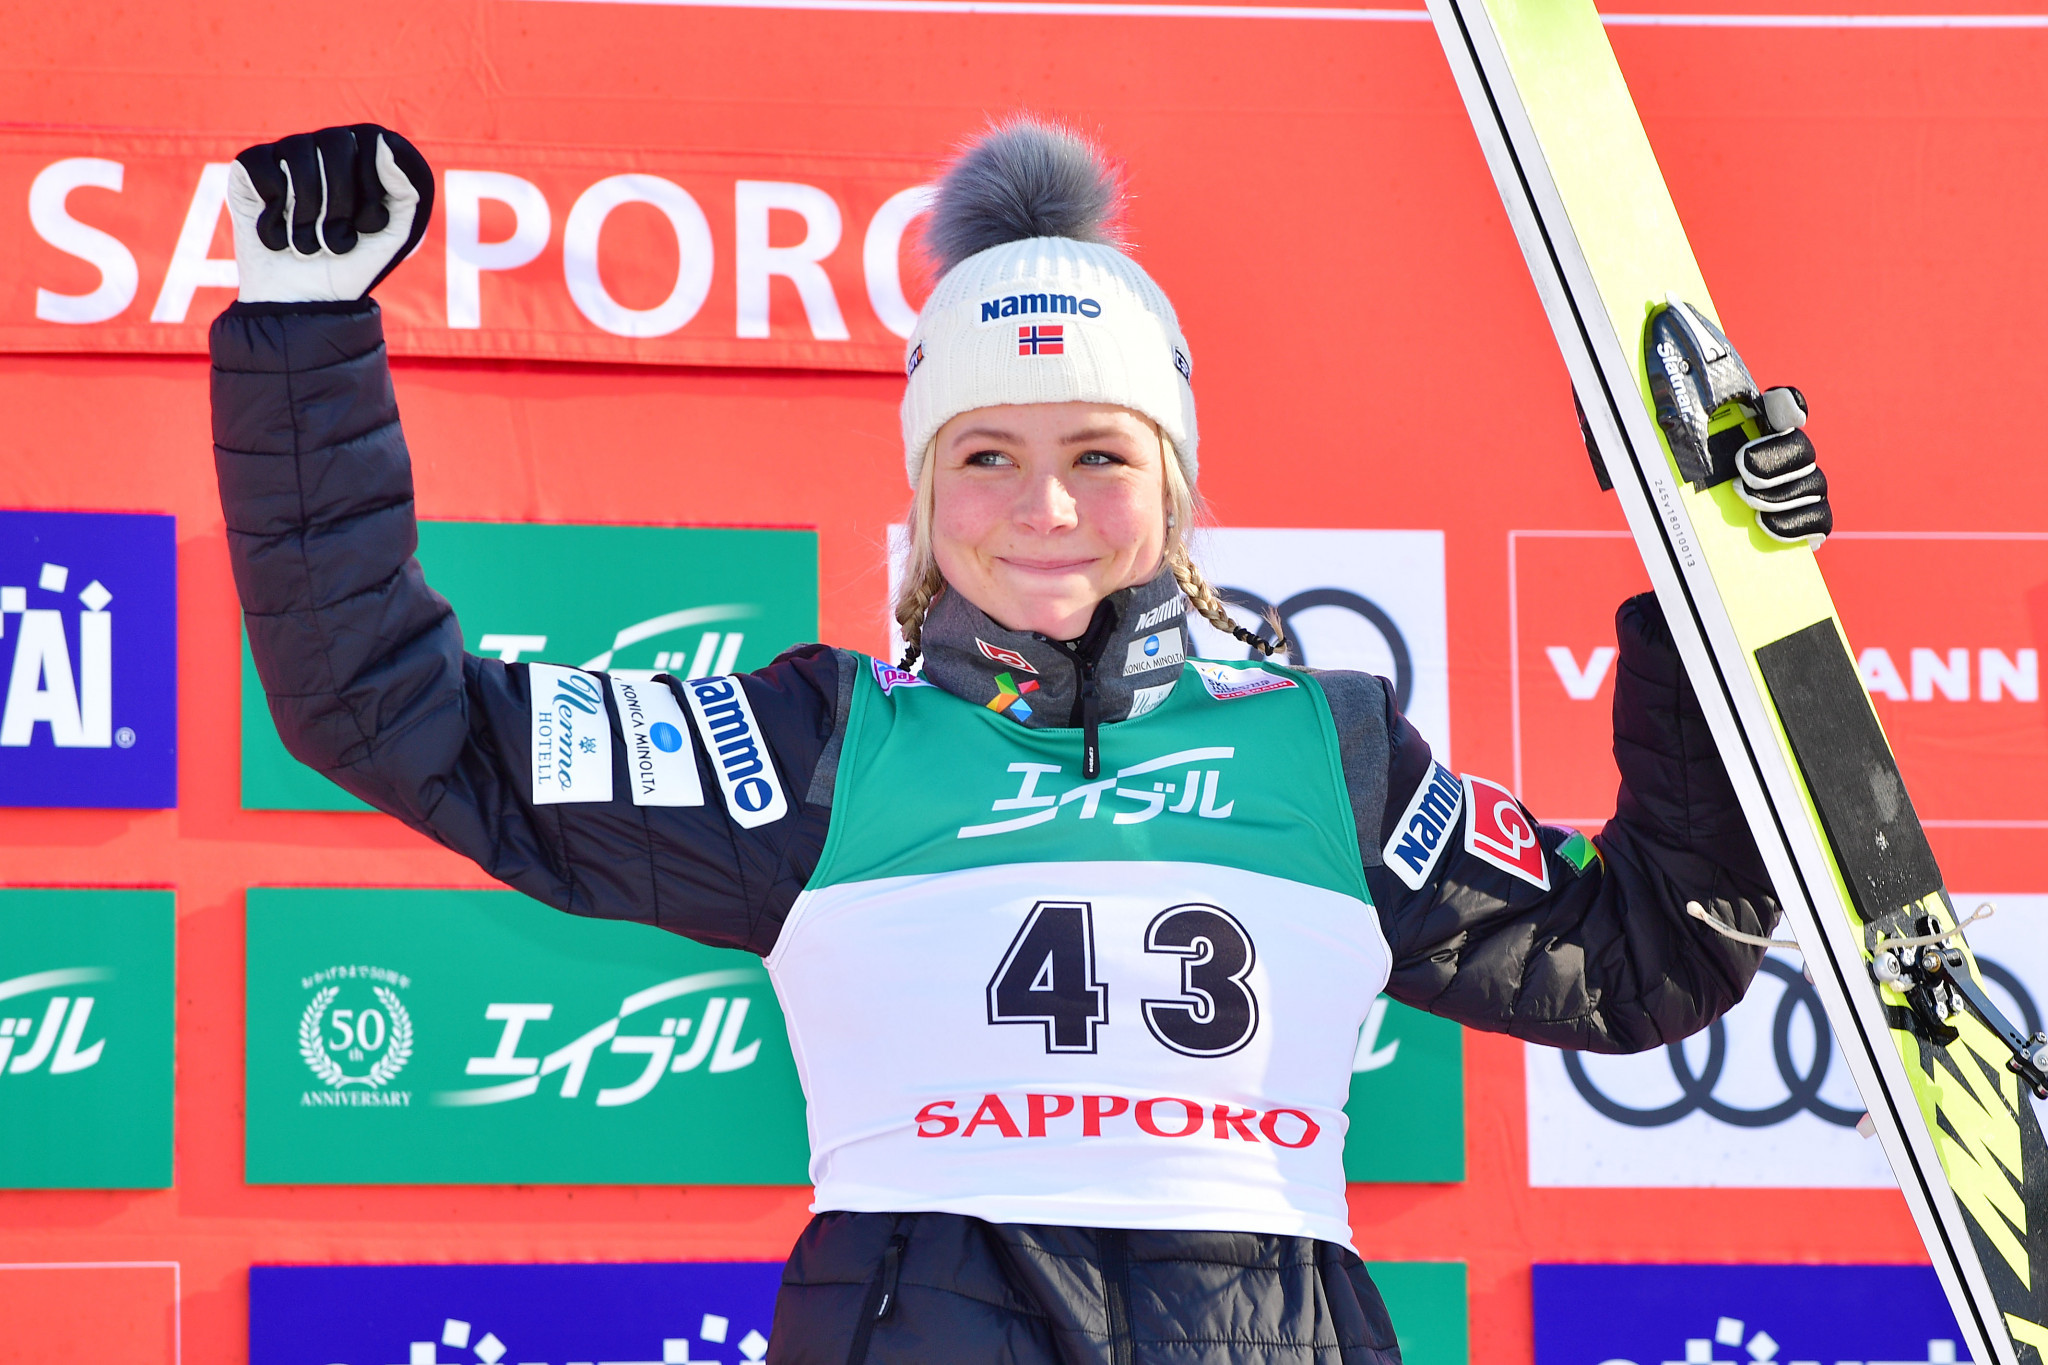 Lundby seeking further wins FIS Ski Jumping World Cup season continues